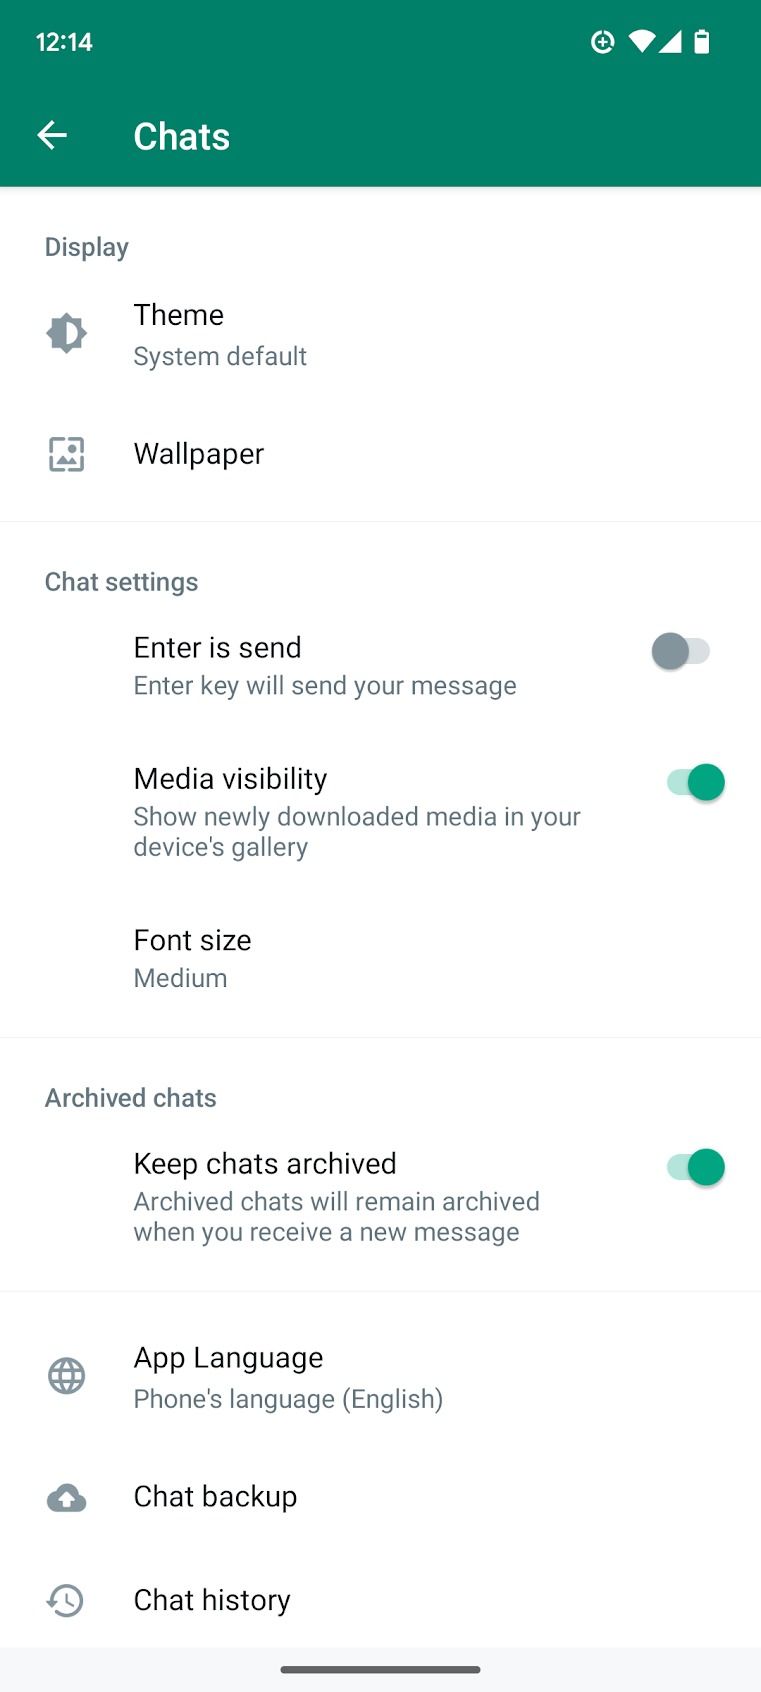 chats menu on WhatsApp